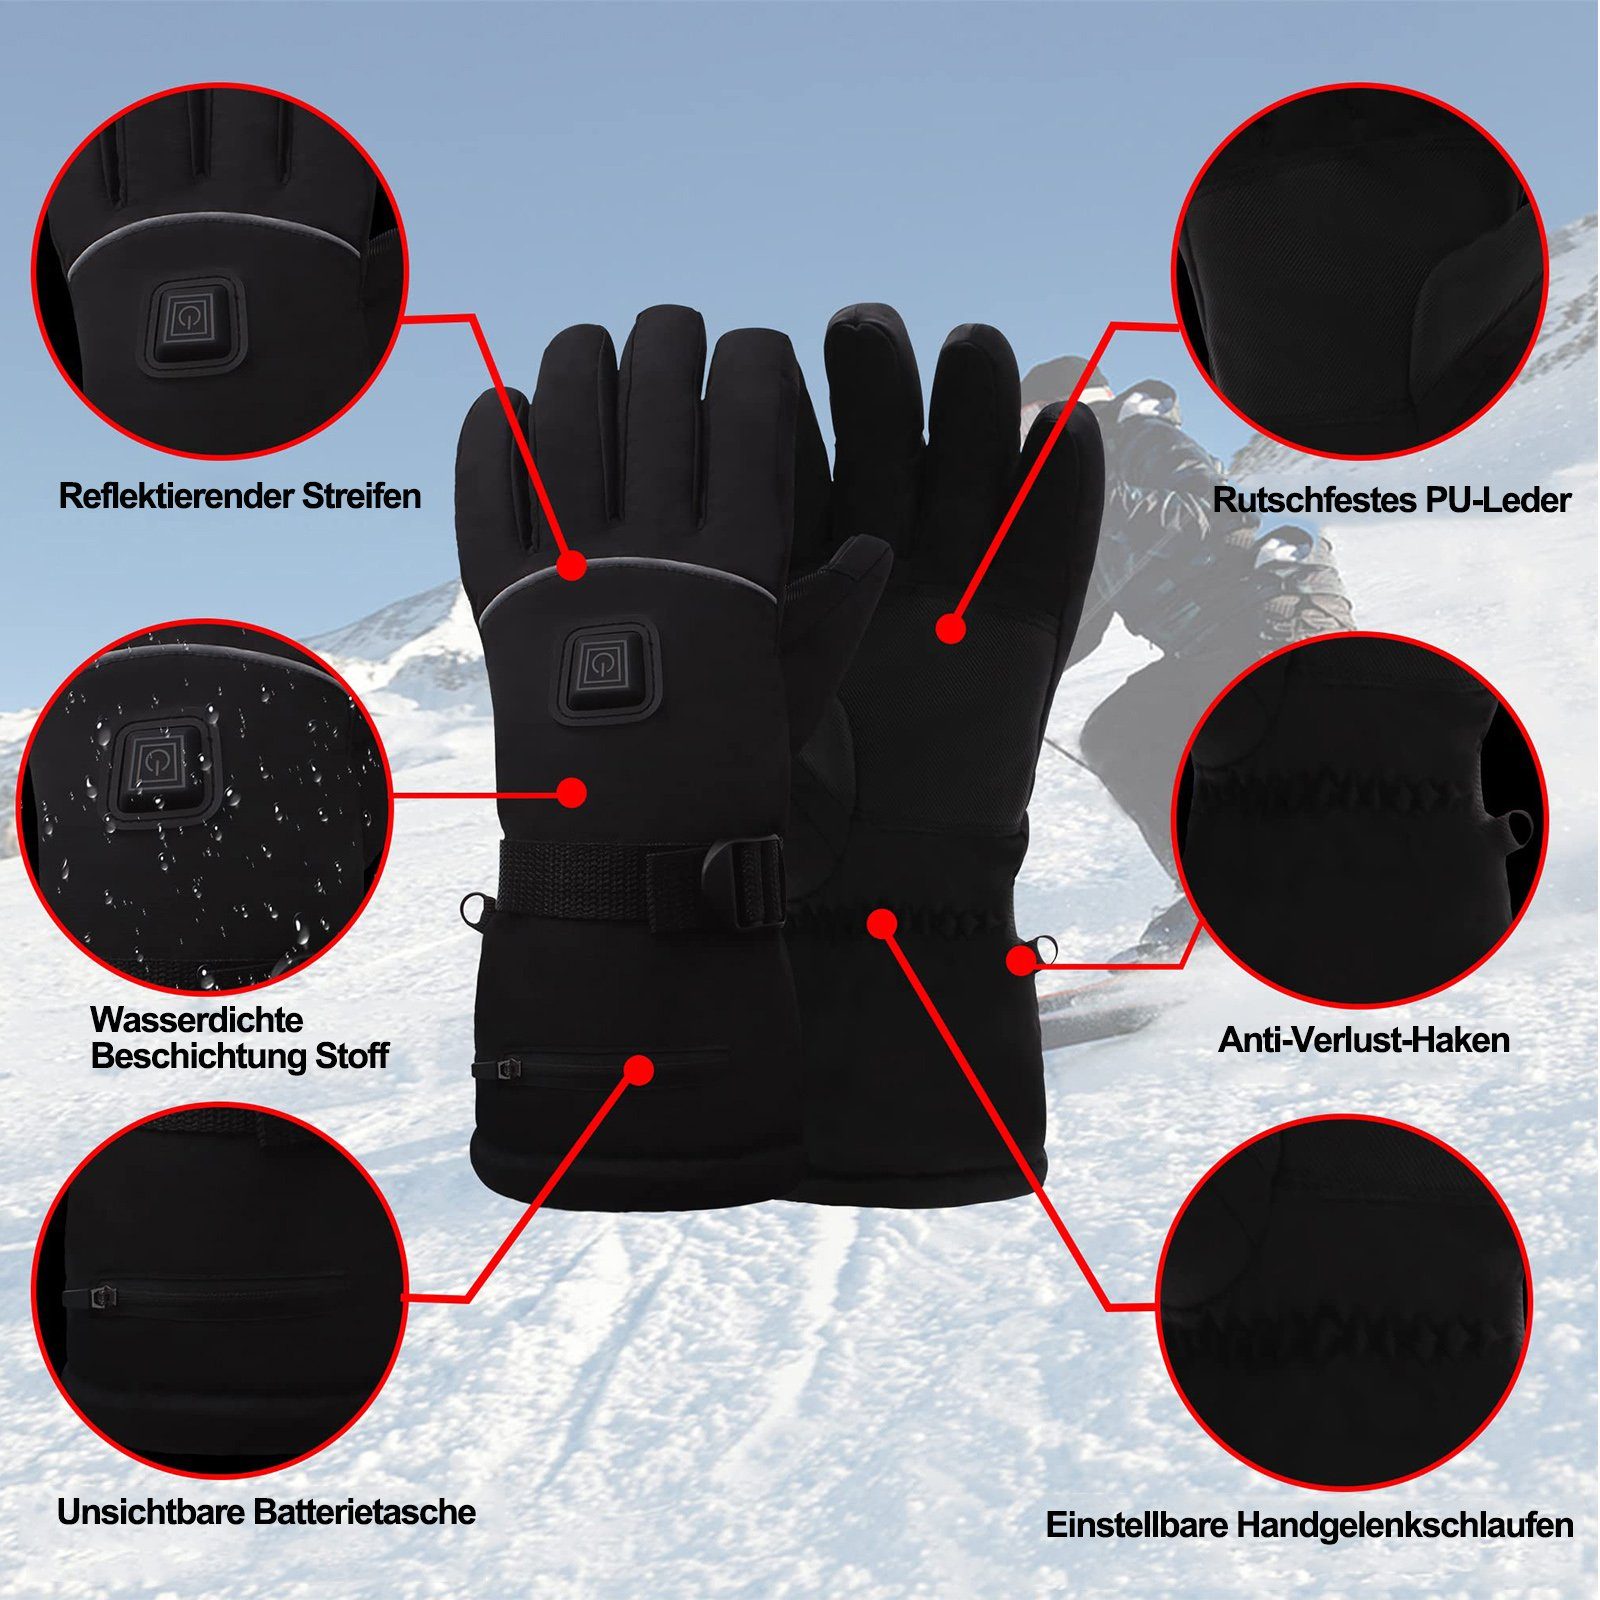 Beheizt, wasserdicht, für Wandern Ski Batterie Jagd Stufen, Elektriker-Handschuhe Paar) Winterarbeit 3 Rosnek (1 Touchscreen,